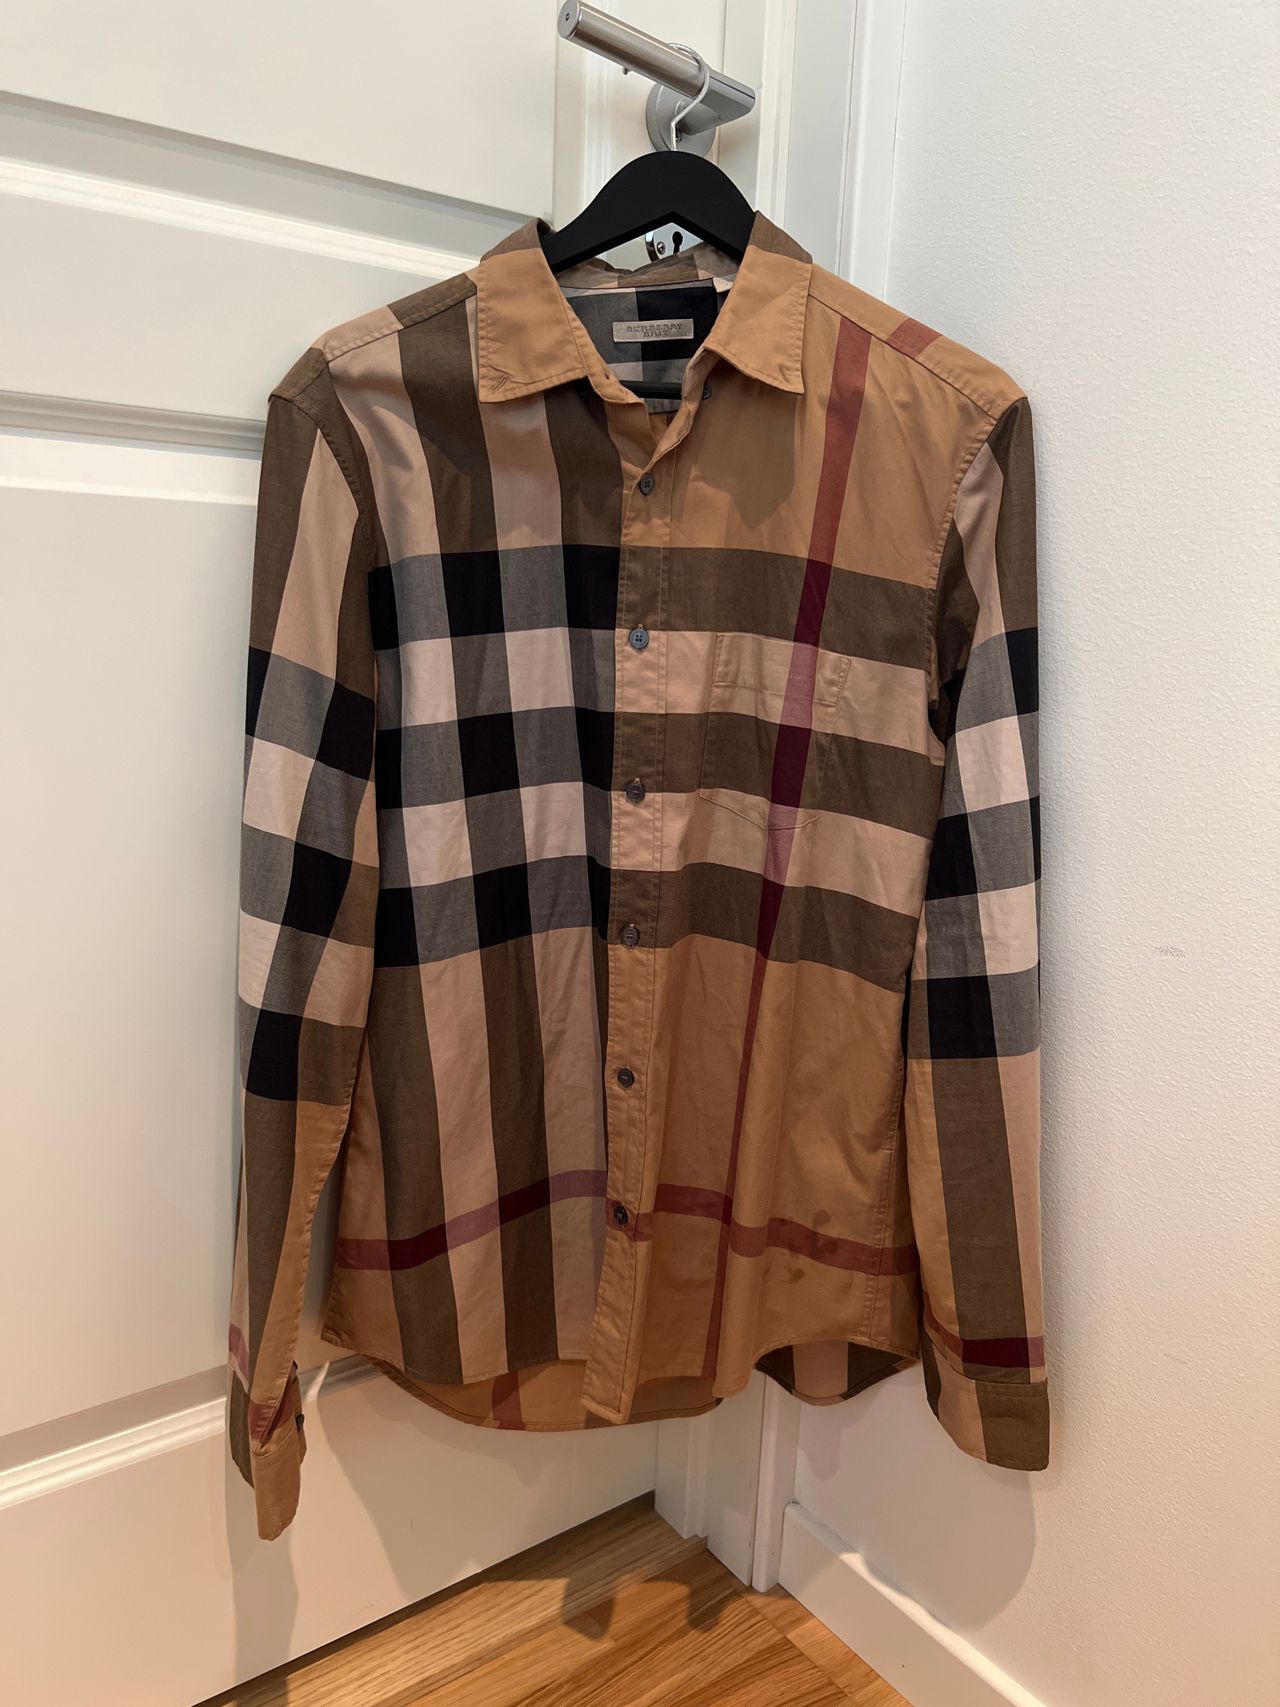 Burberry skjorte brun/beige/sort/rød str.L | torget